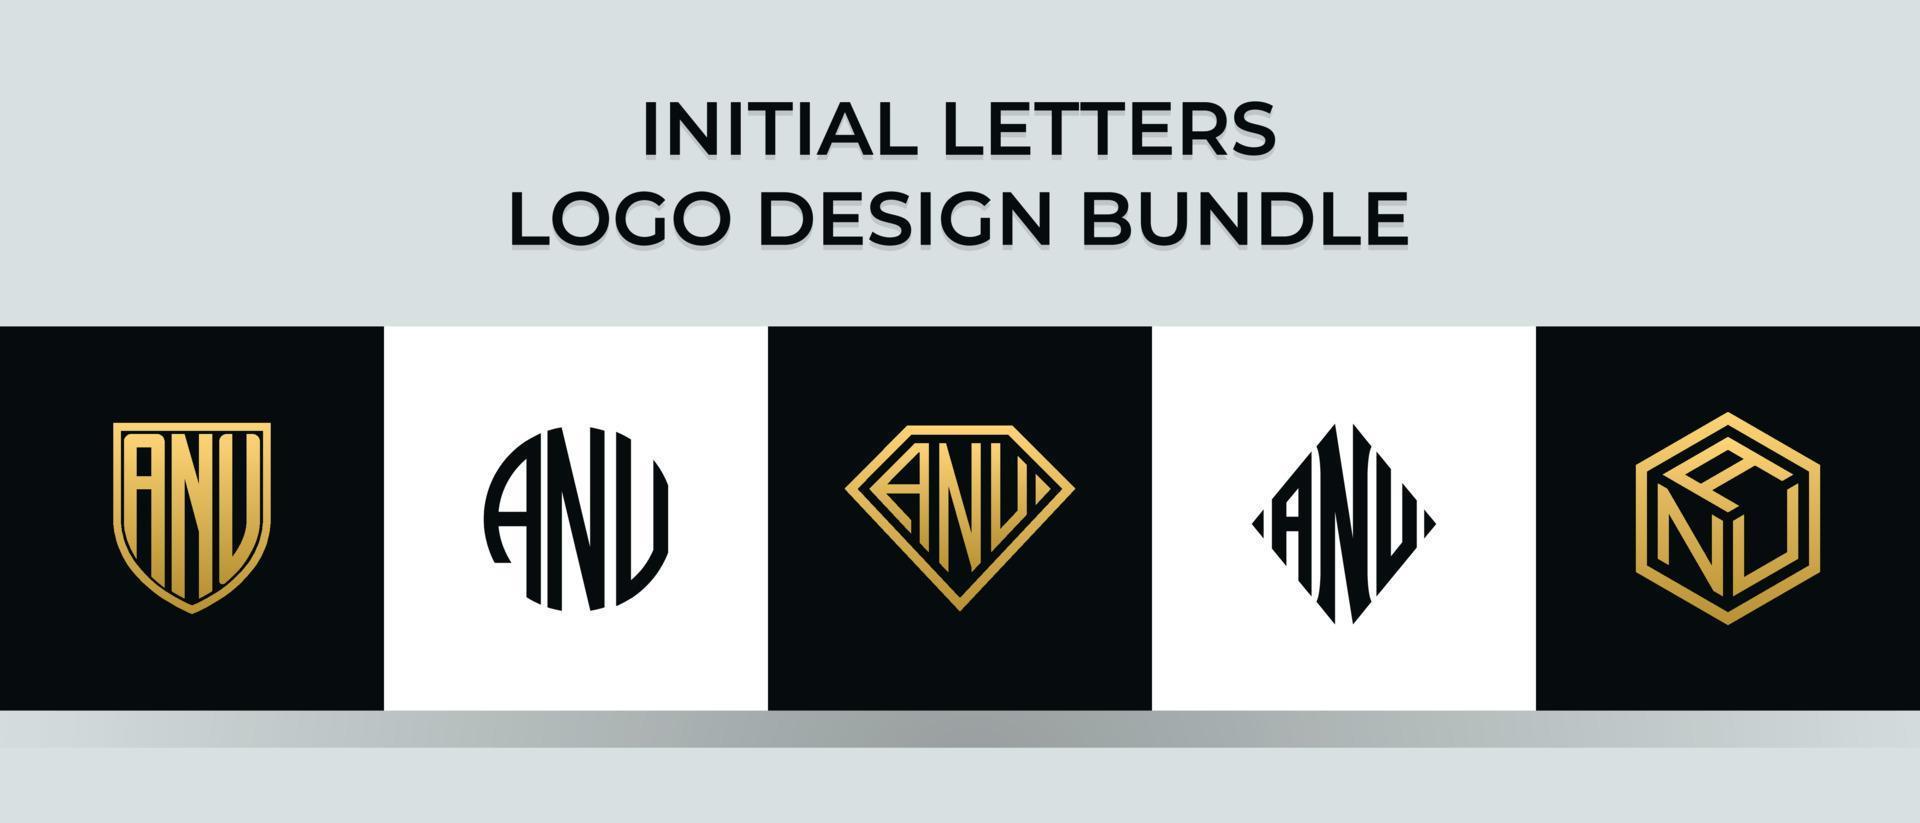 Paquet de conceptions de logo de lettres initiales anu vecteur